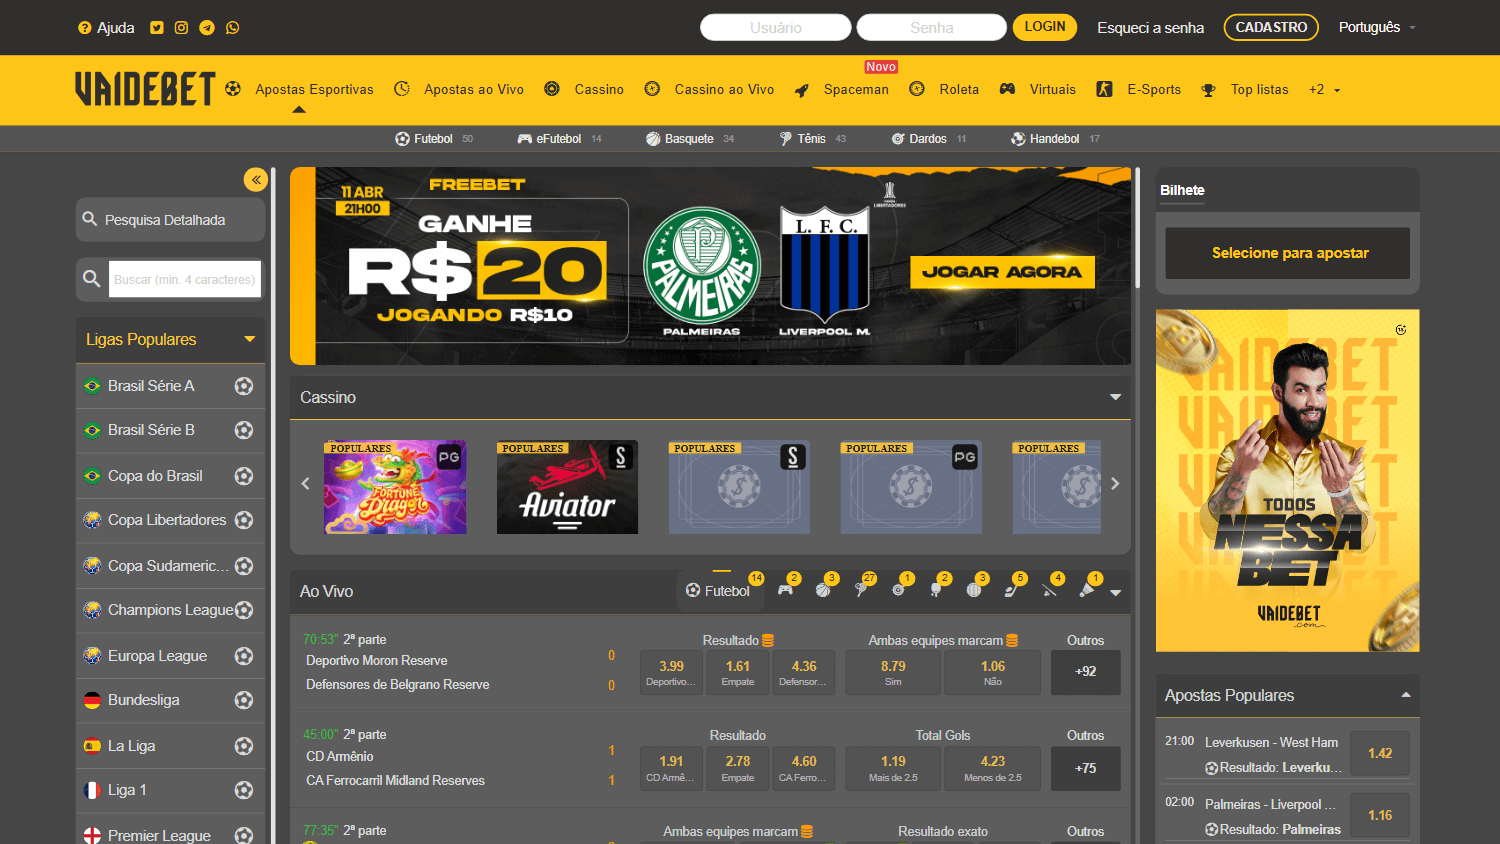 vaidebet_casino_homepage_desktop